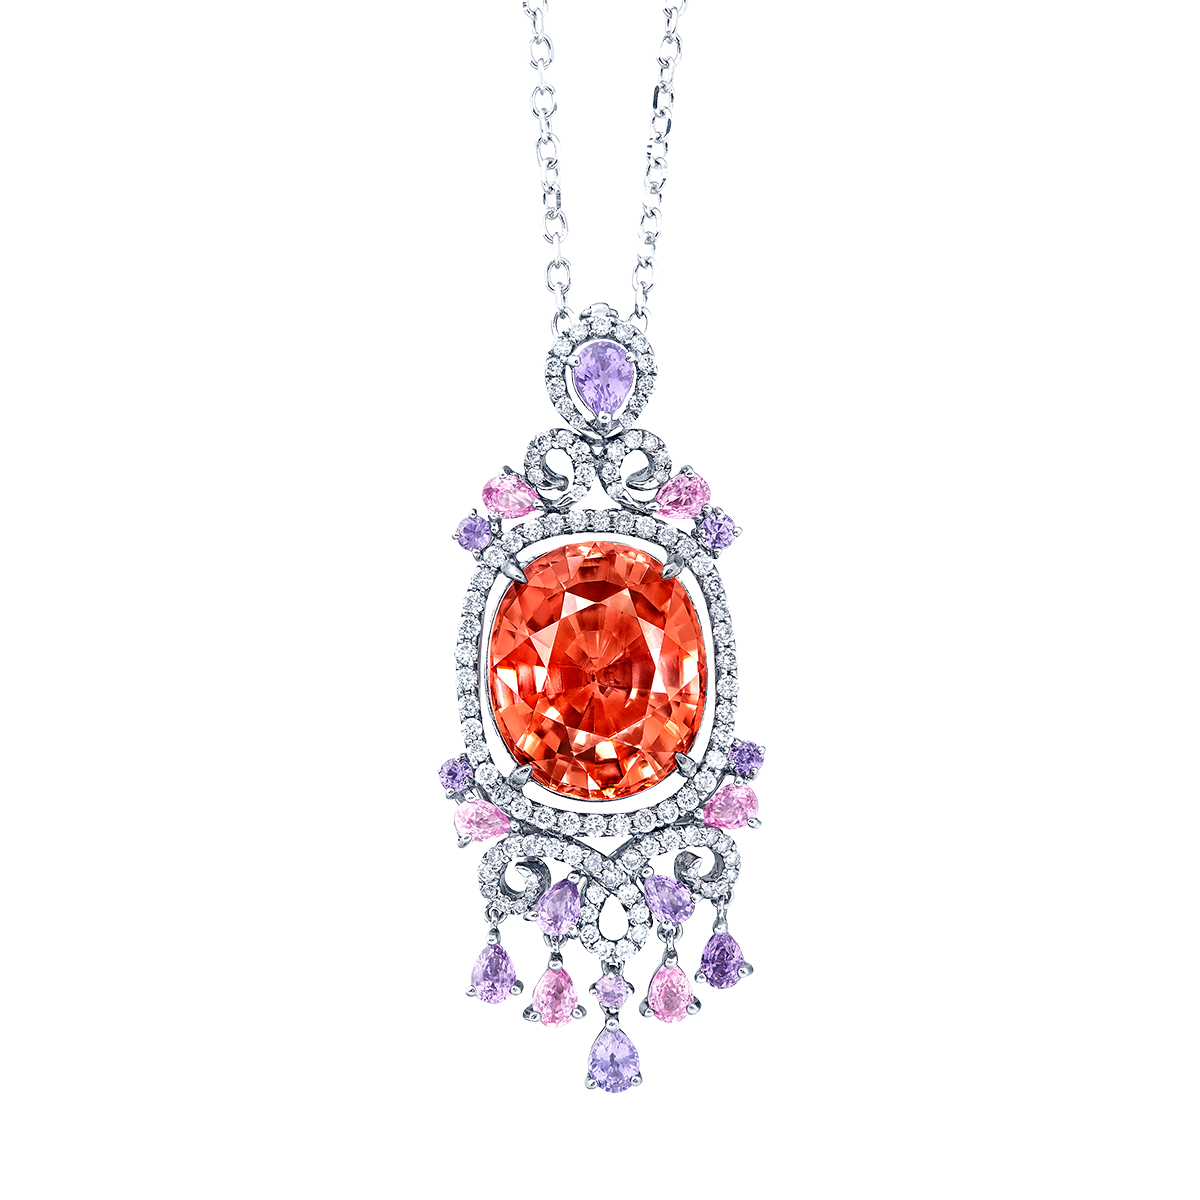 11.84克拉 彩色碧璽鑽石墜鍊
Multi-Colored Tourmaline and 
Diamond Pendant Necklace